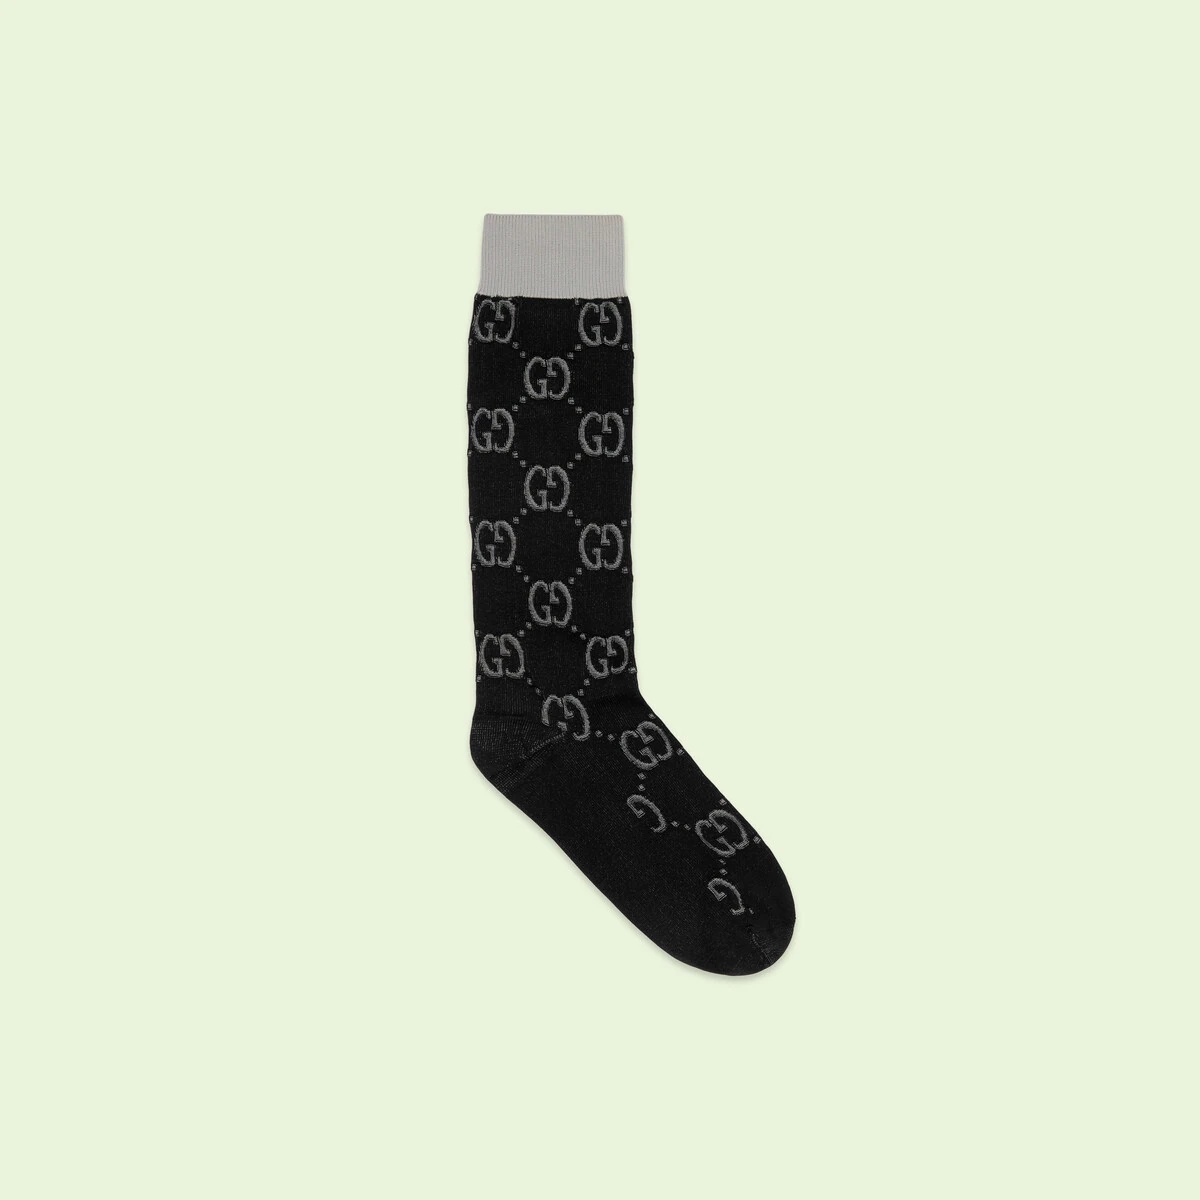 GG knit socks - 1